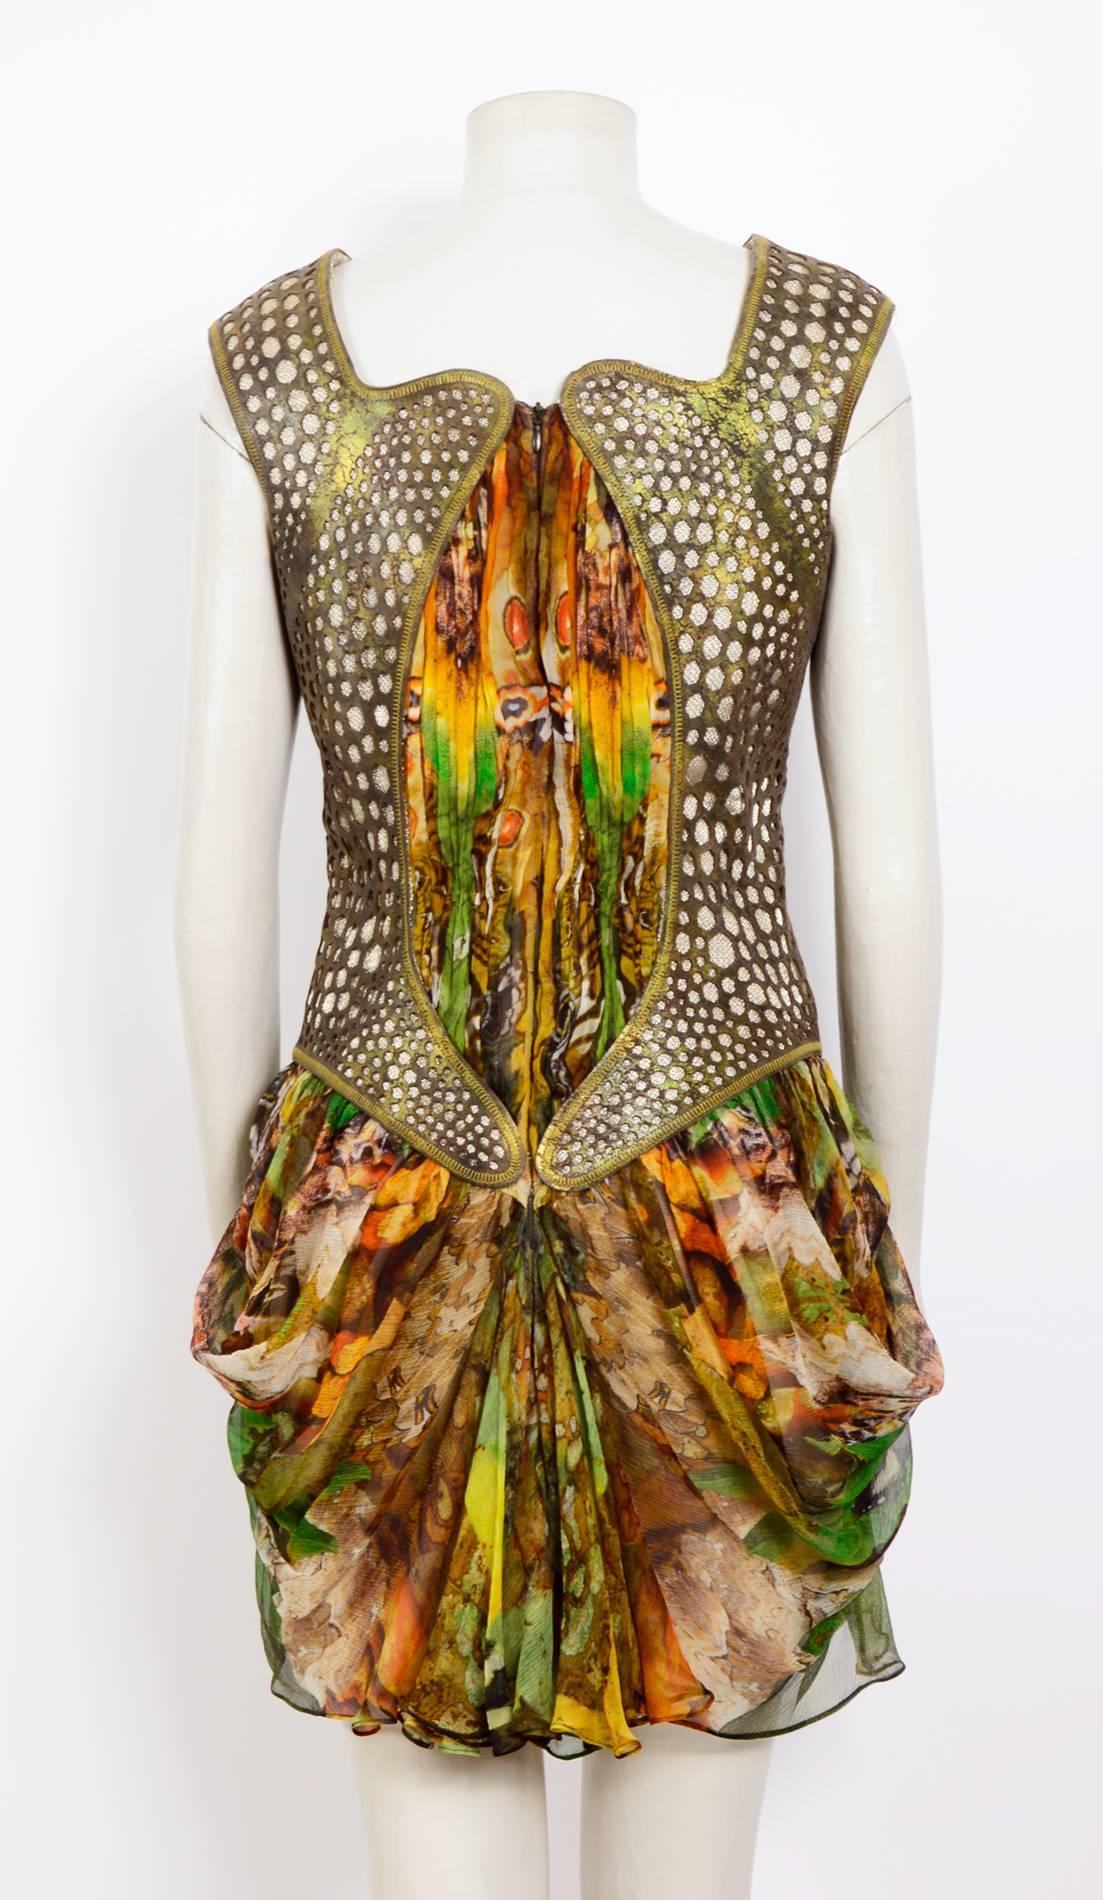 Brown Alexander McQueen Plato's Atlantis Silk Dress with Leather Harness